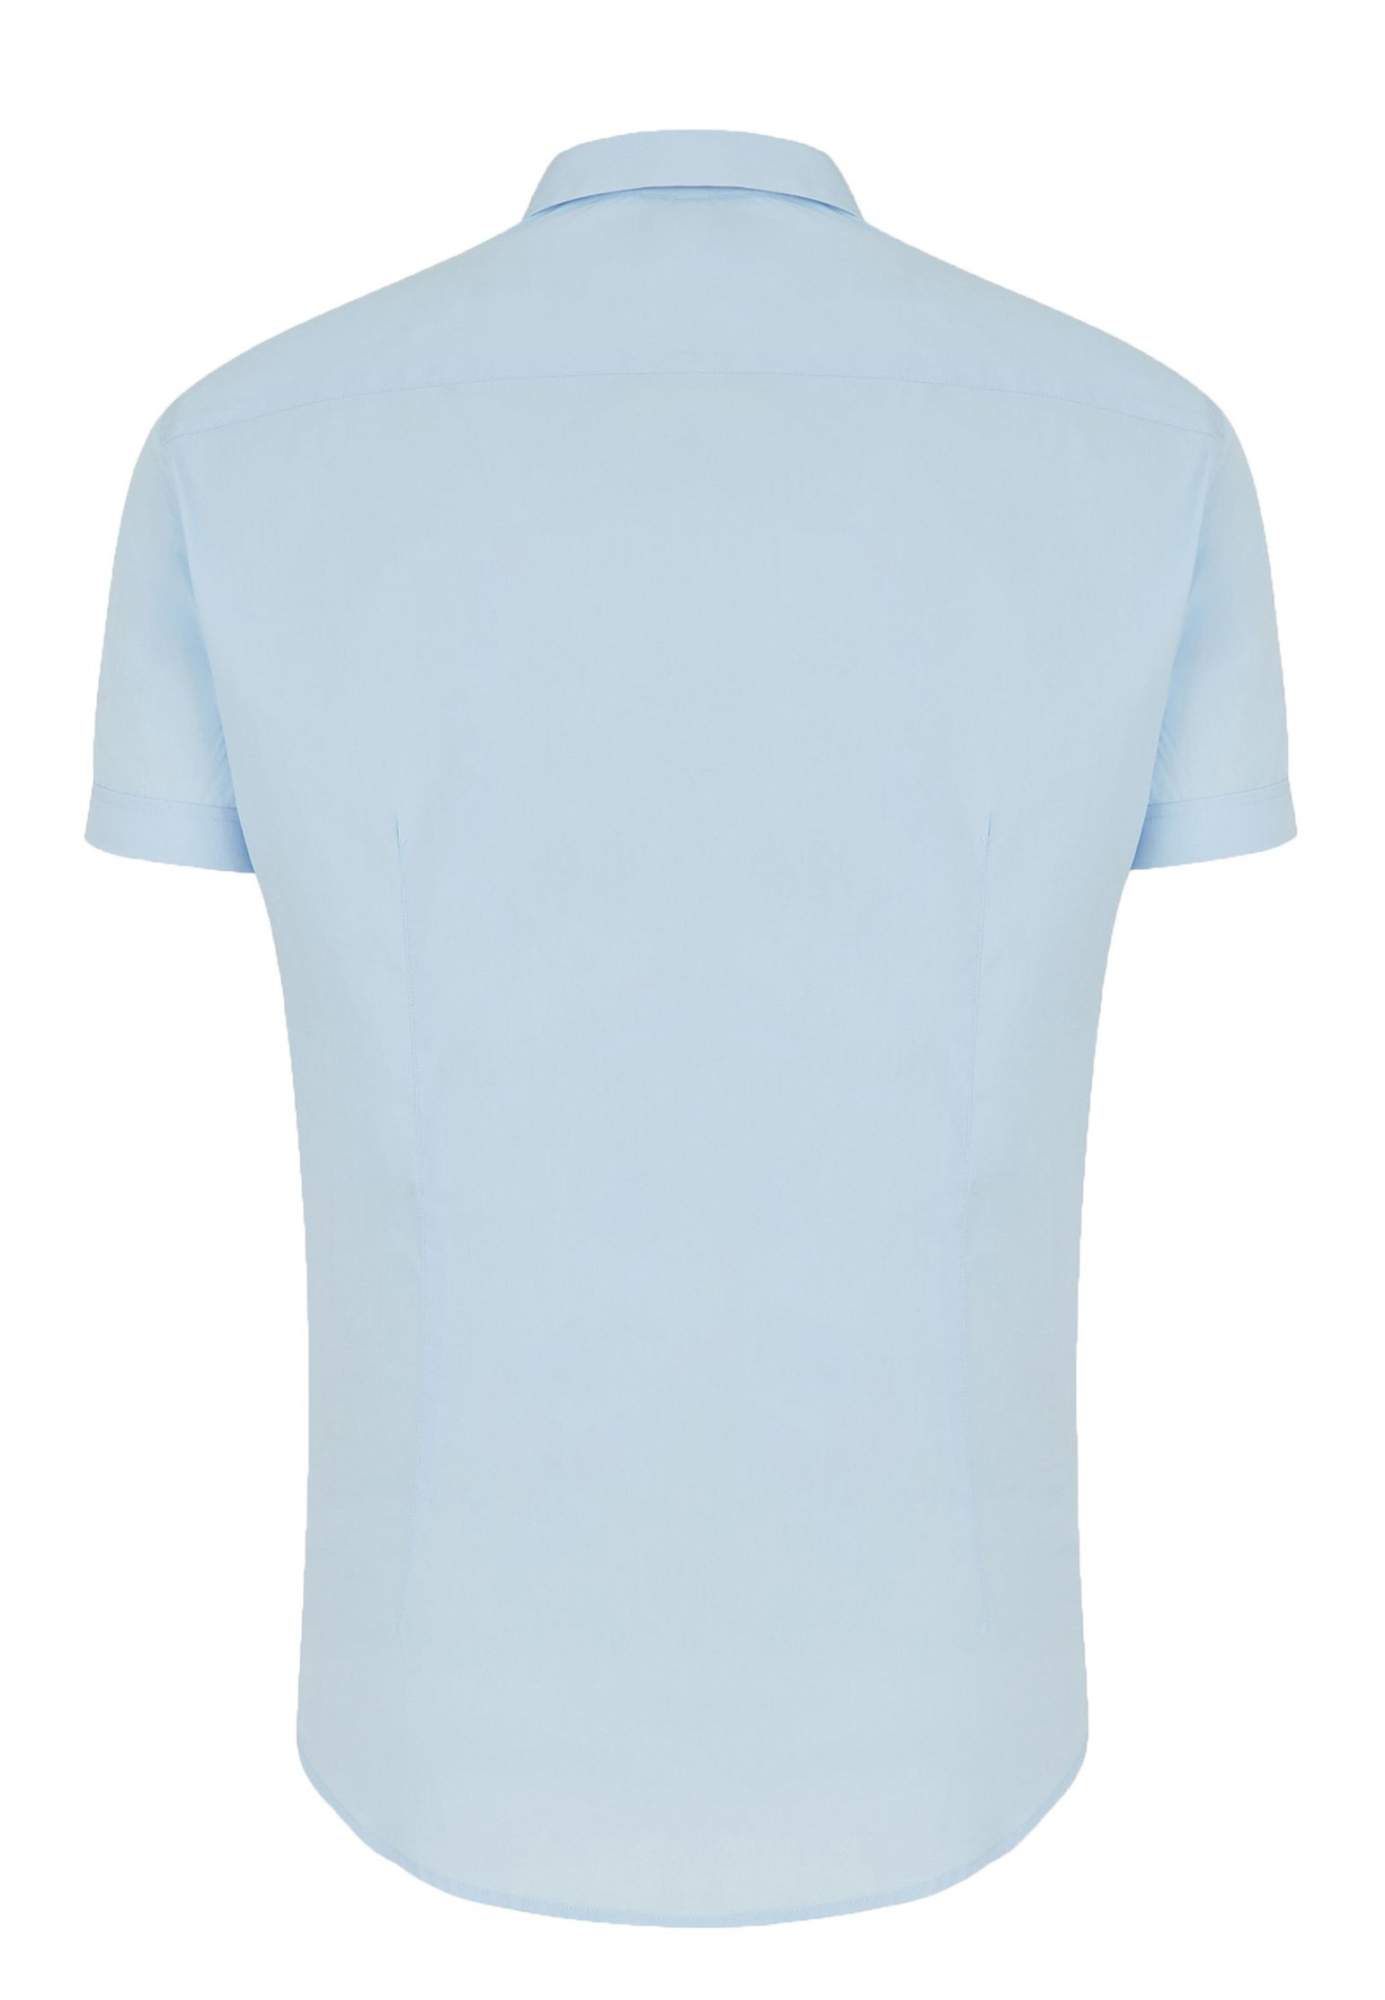 Рубашка мужская Emporio Armani 126902 голубая M